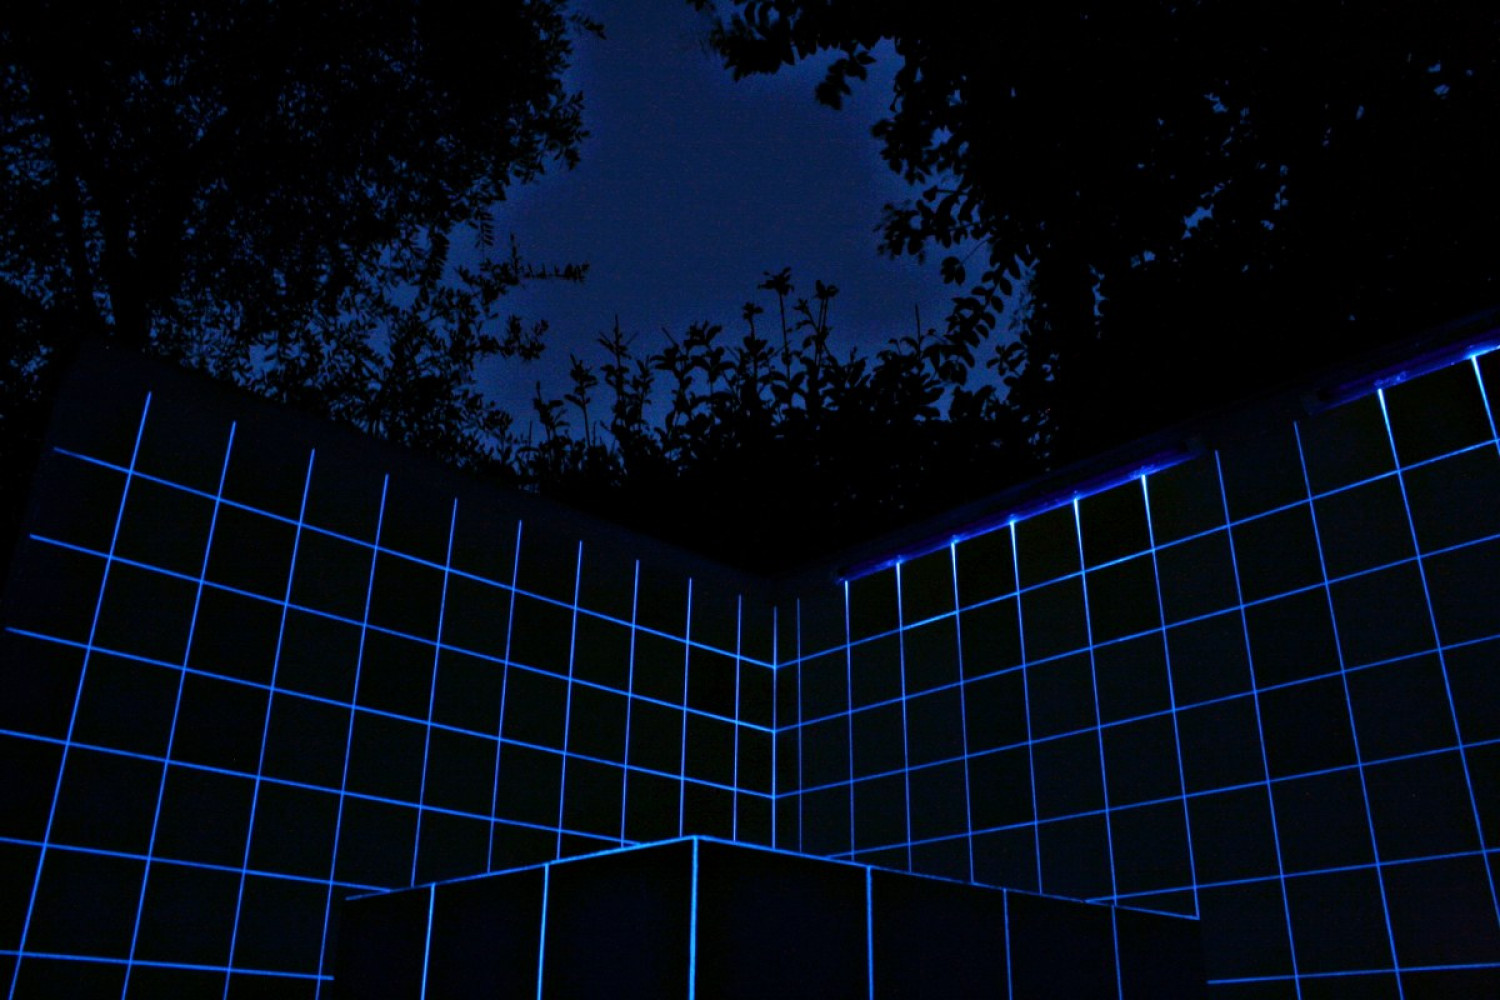 Alex Dorici, ‘Azulejos Light Line 844 (night view)’, 2016